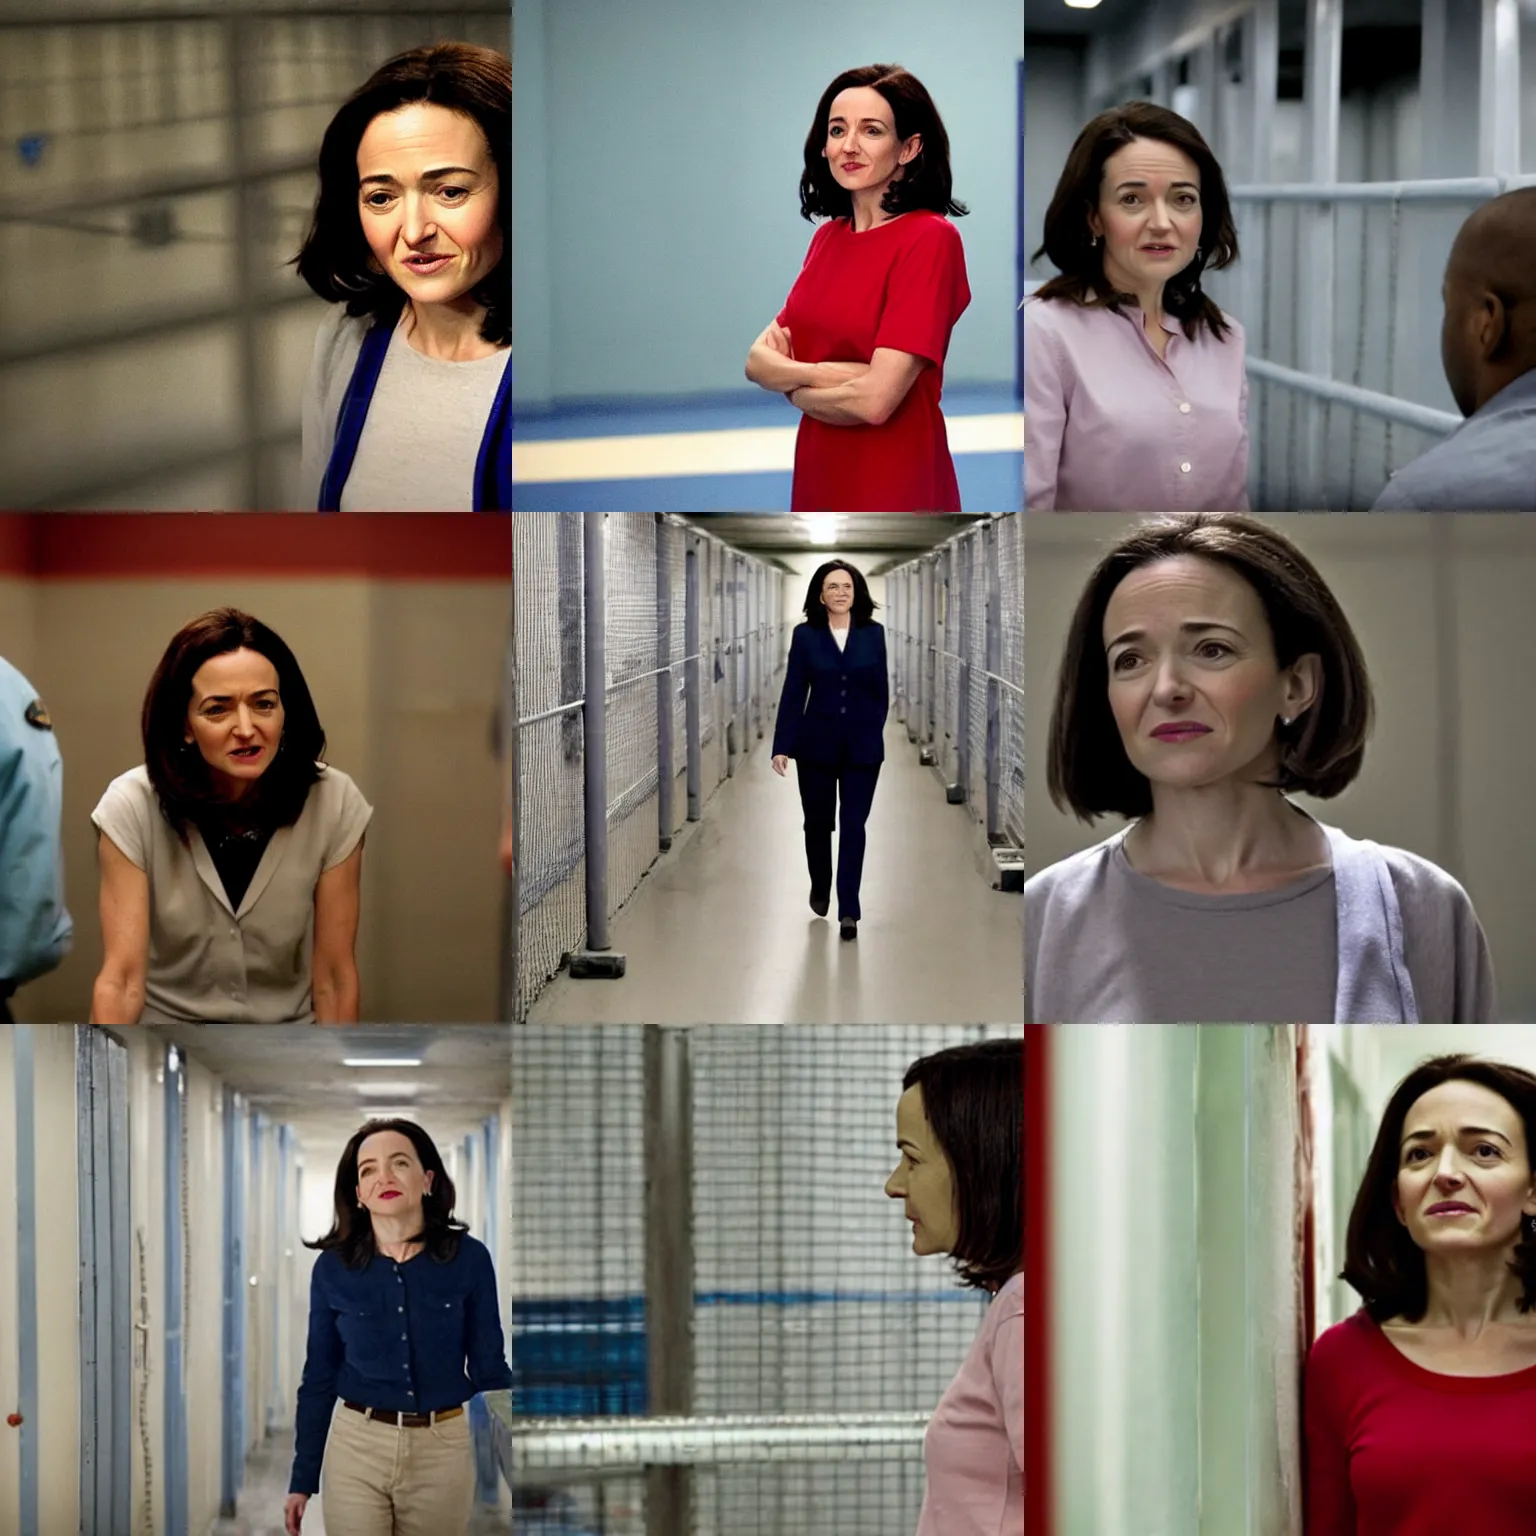 Prompt: Movie still of Sheryl Sandberg in Supermax prison in Facebook The Movie, directed by Steven Spielberg